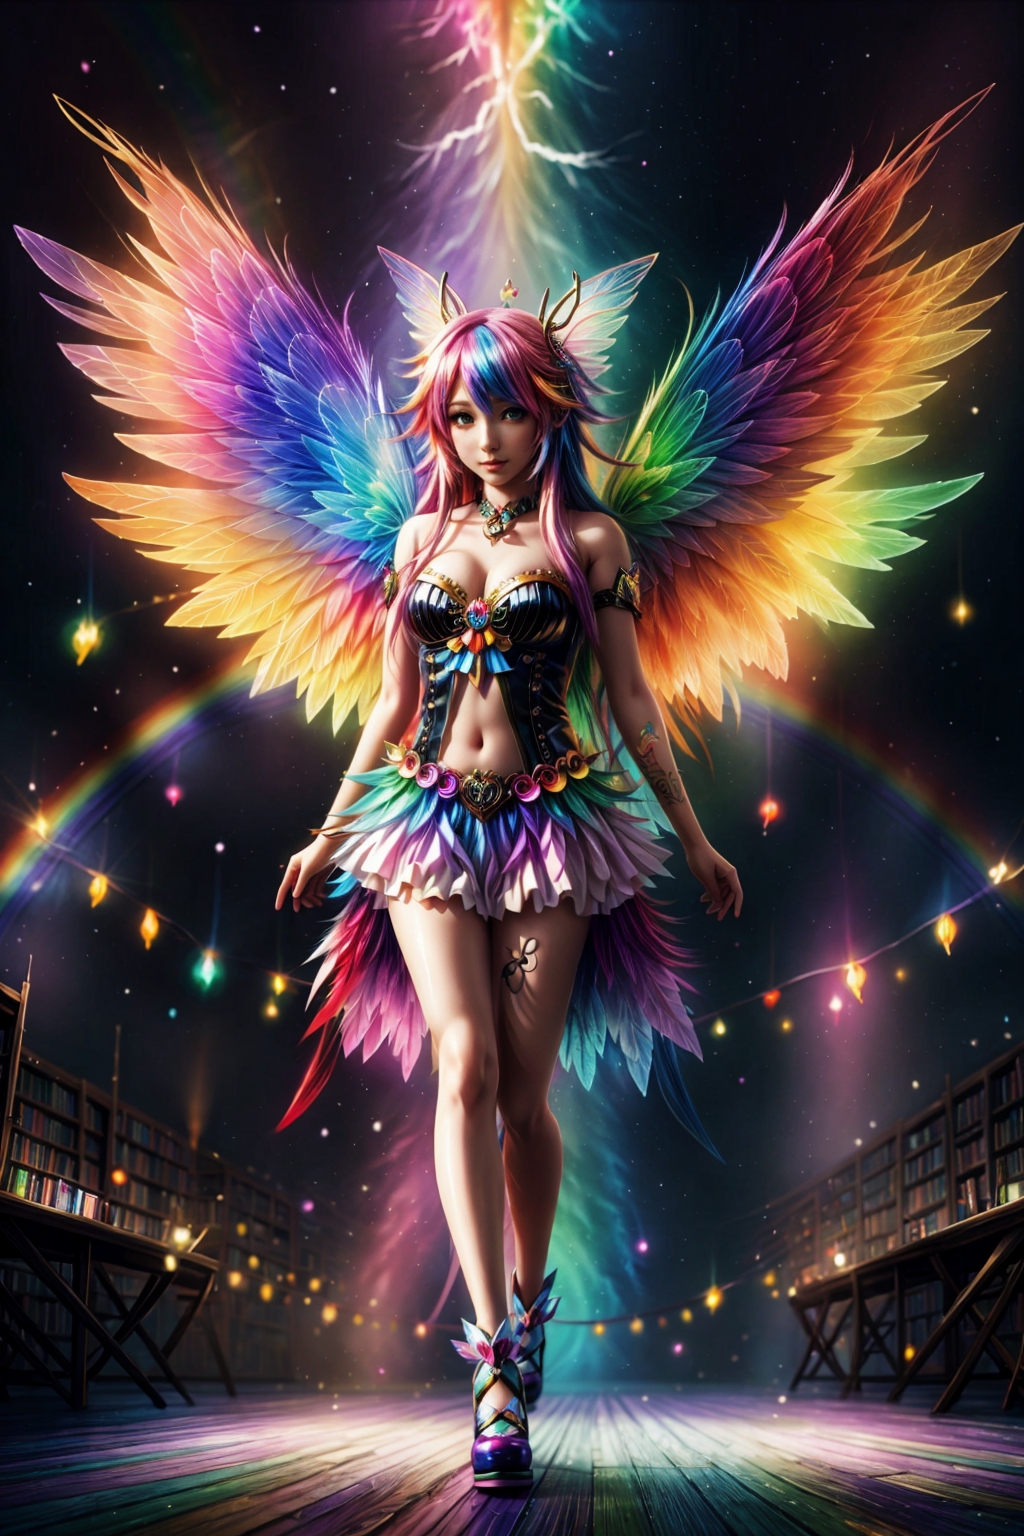 anime girl with long flowing rainbow hair with rainb...